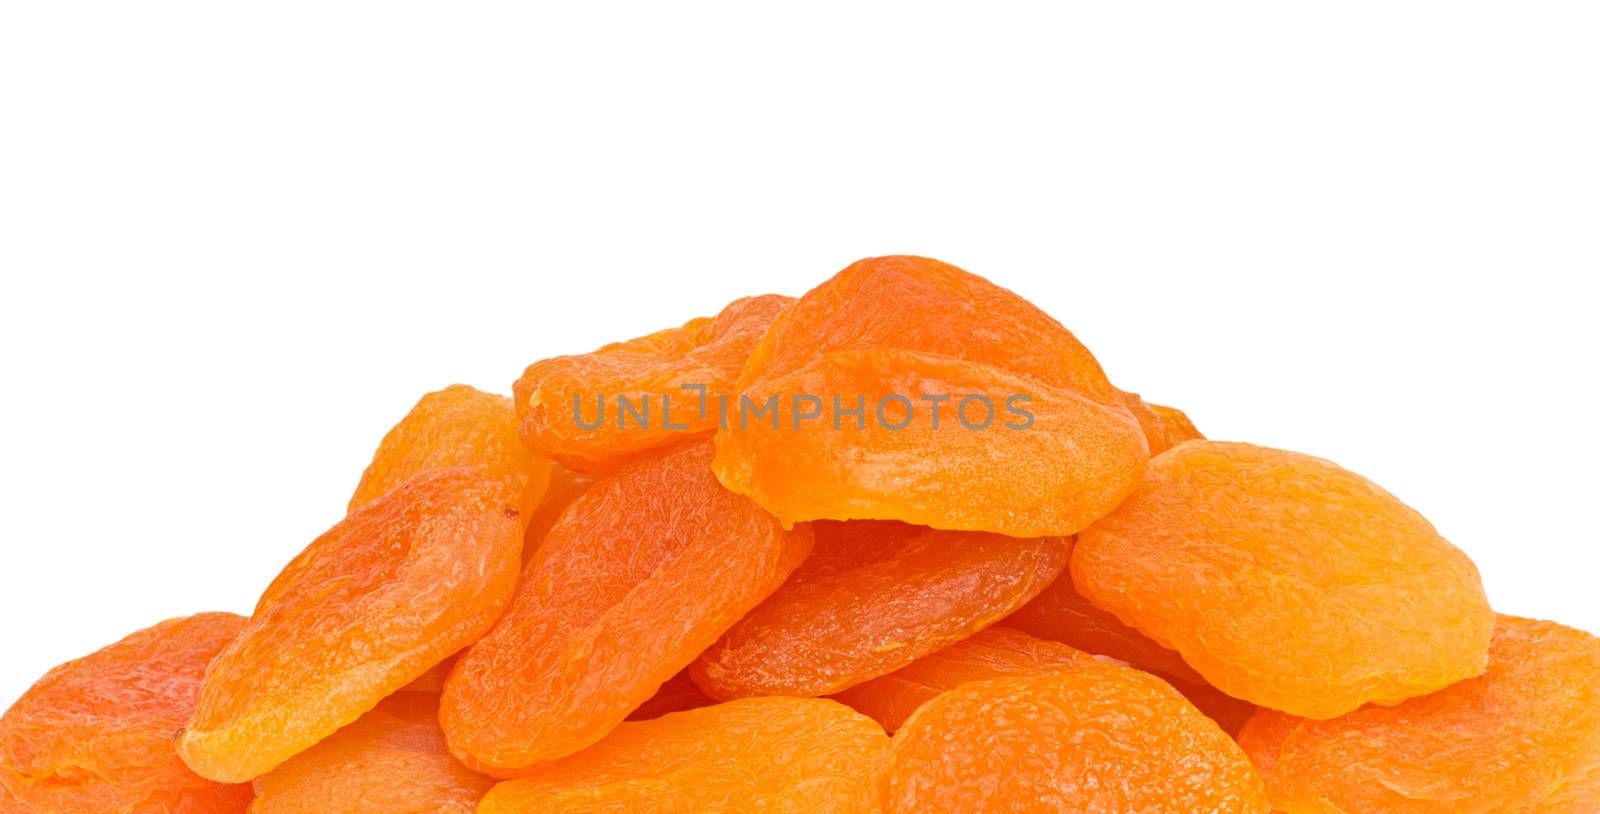 heap of dried apricots by ozaiachin